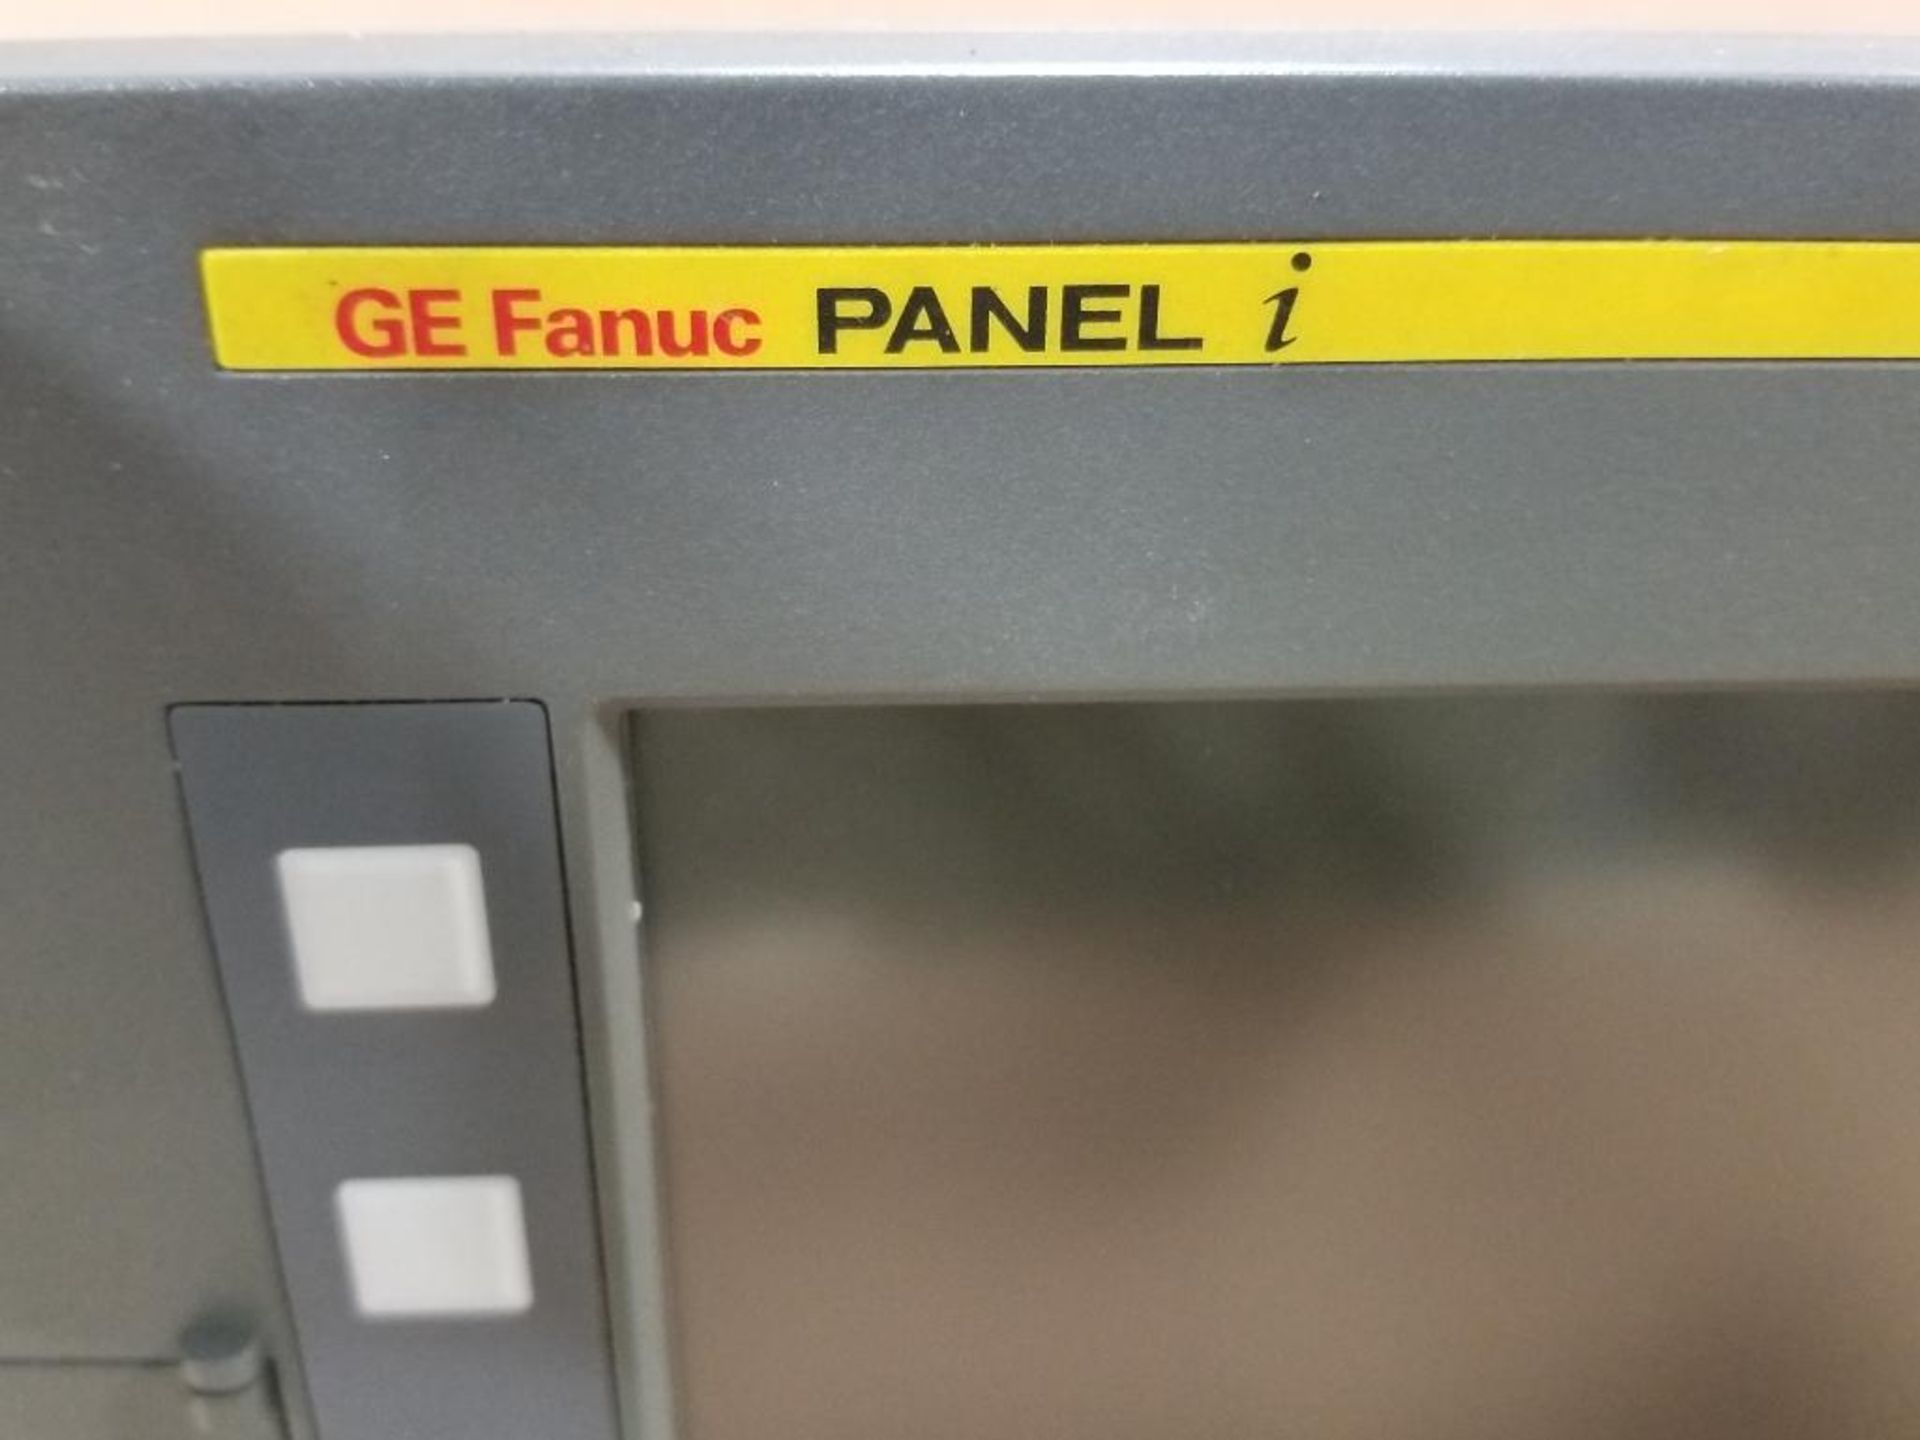 GE Fanuc A08B-0084-D432 Panel i base unit. - Image 2 of 6